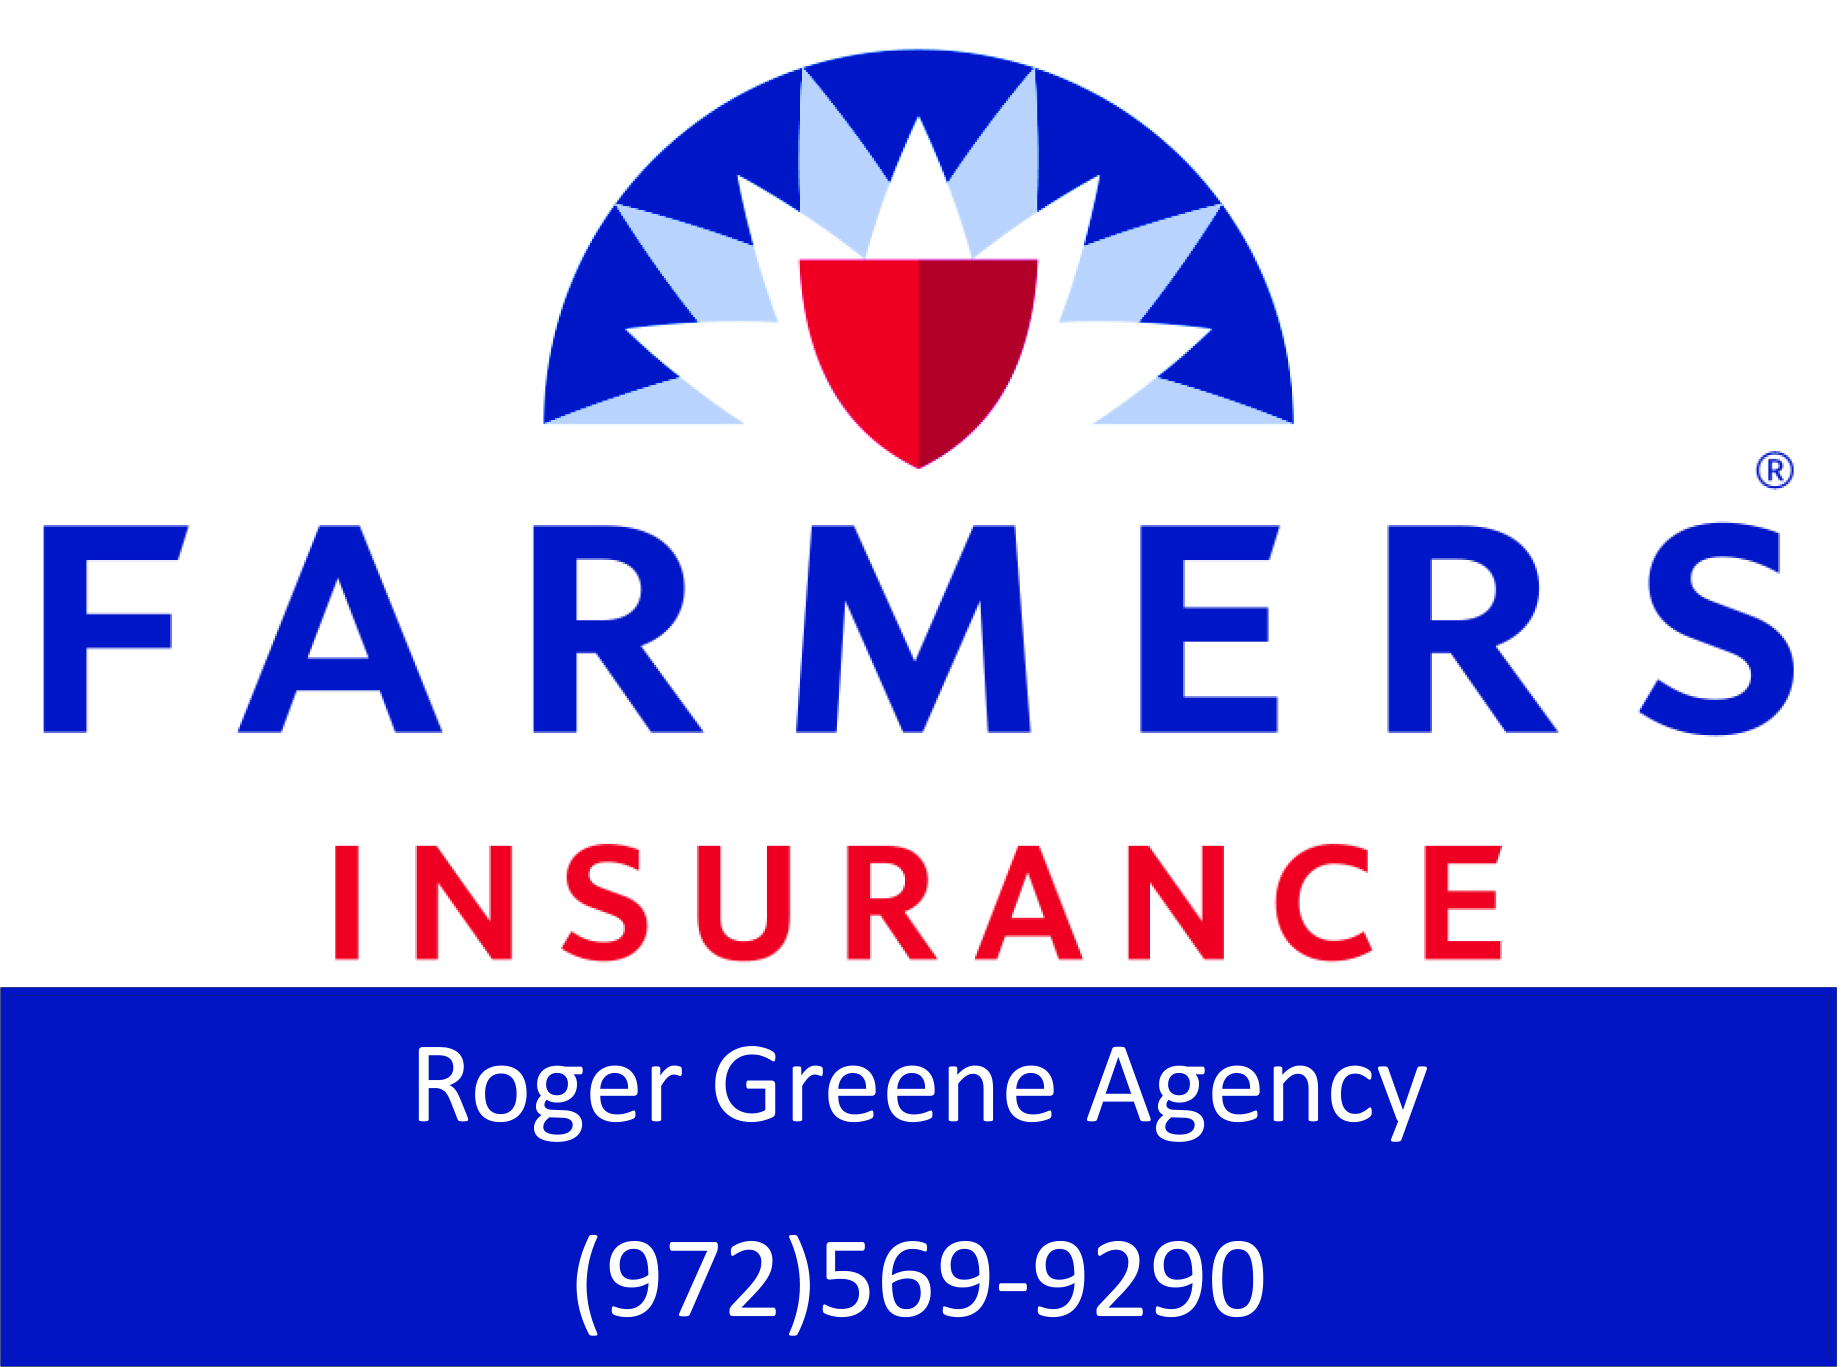 Farmers insurance logo